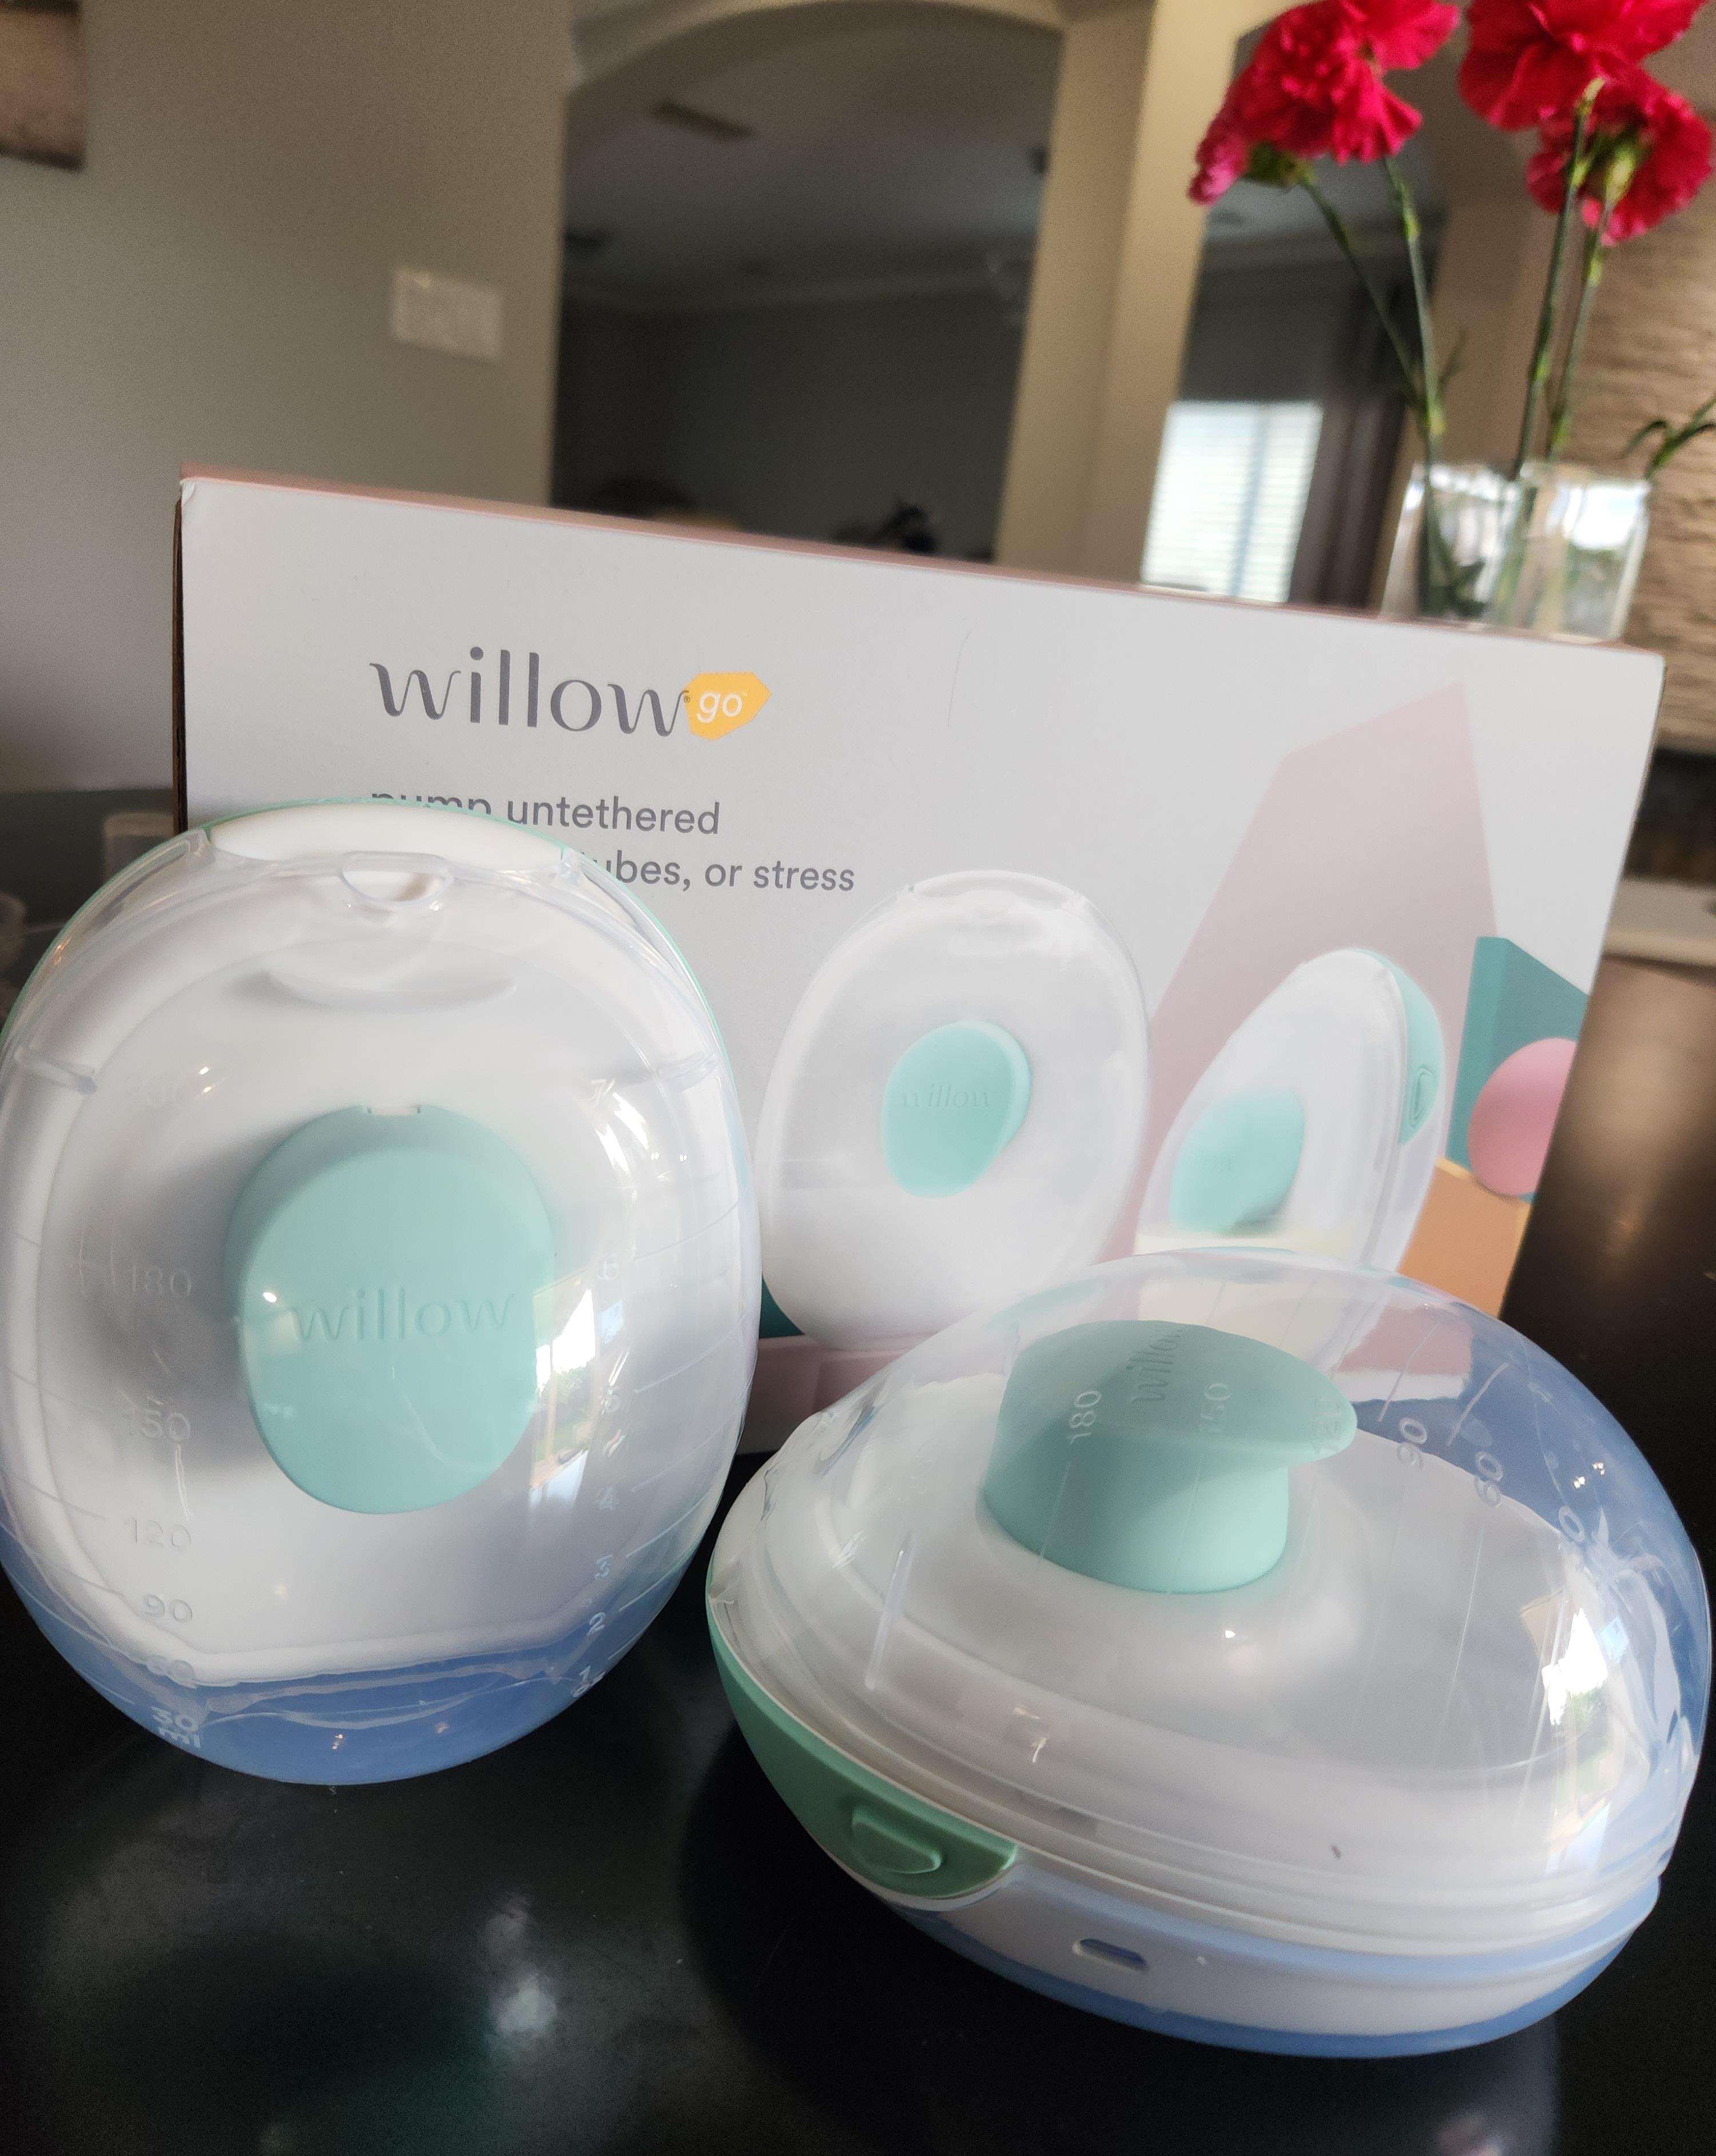 Wireless Breast Pumps - Willow vs Elvie? - May 2024 Babies